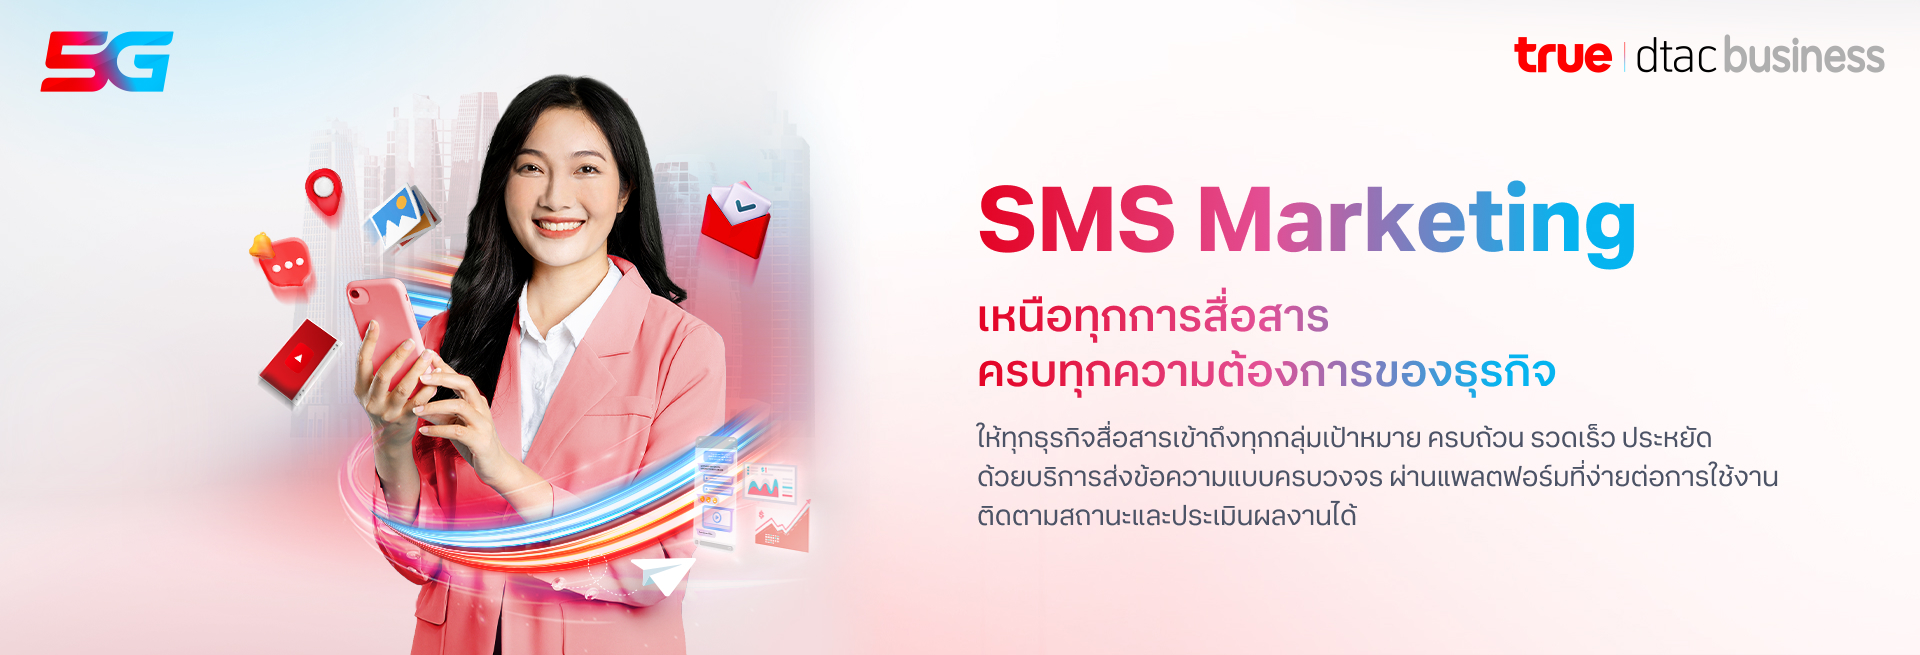 SMS-Marketing-desktop-1920x655-2